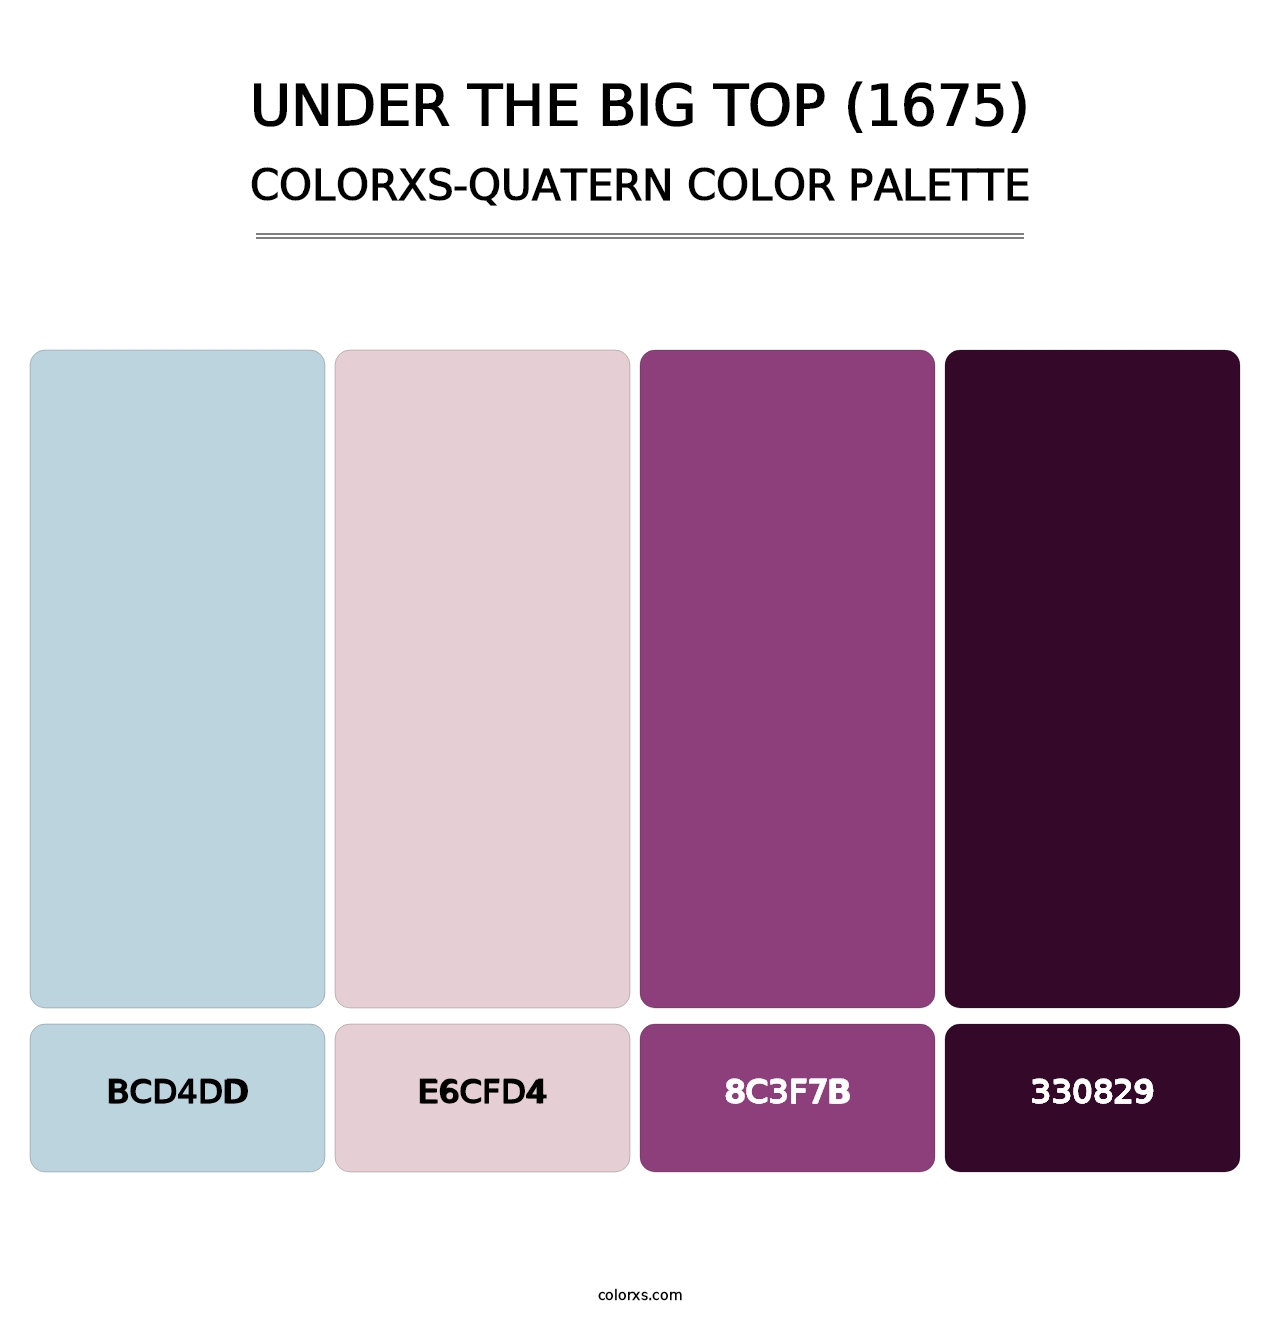 Under the Big Top (1675) - Colorxs Quatern Palette